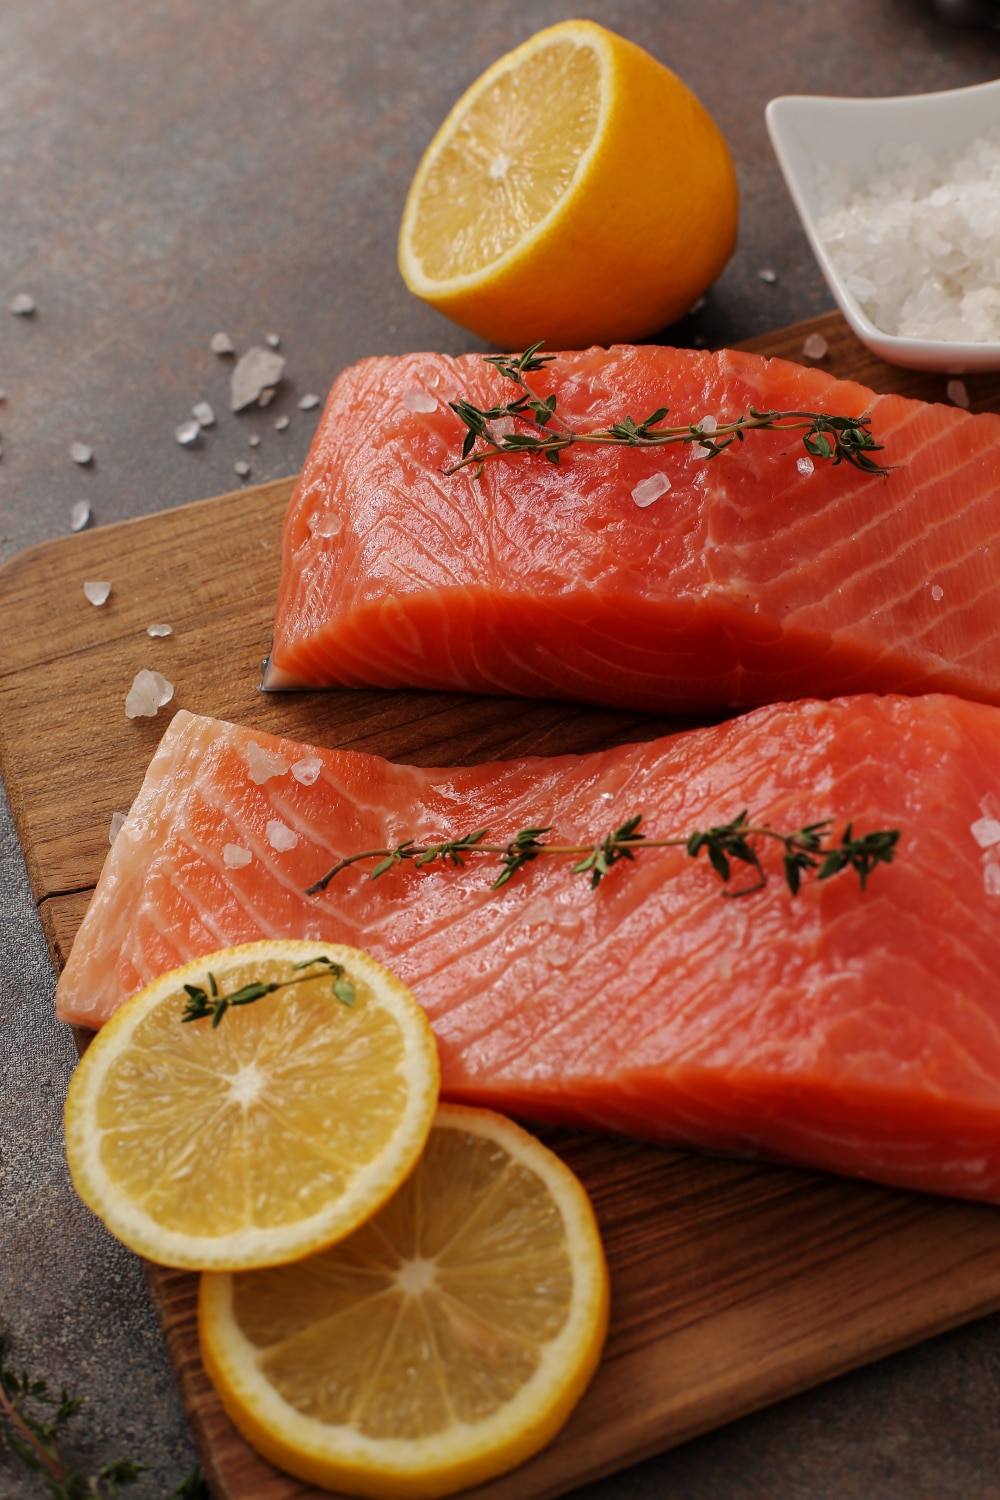 Are king salmon good eating?